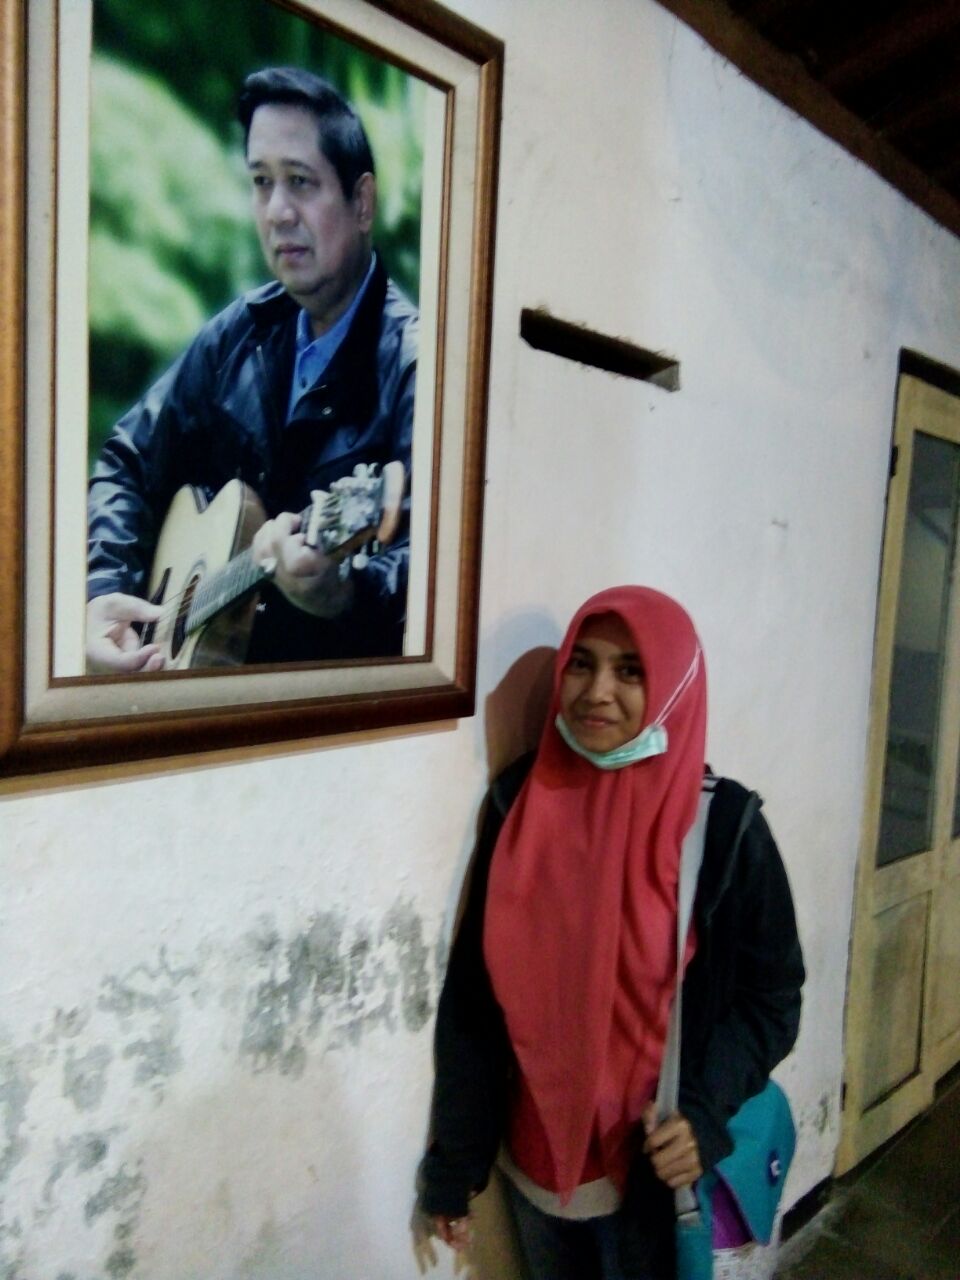 Kediaman SBY dipenuhi foto beliau (c) Verwati Iriani/Travelingyuk